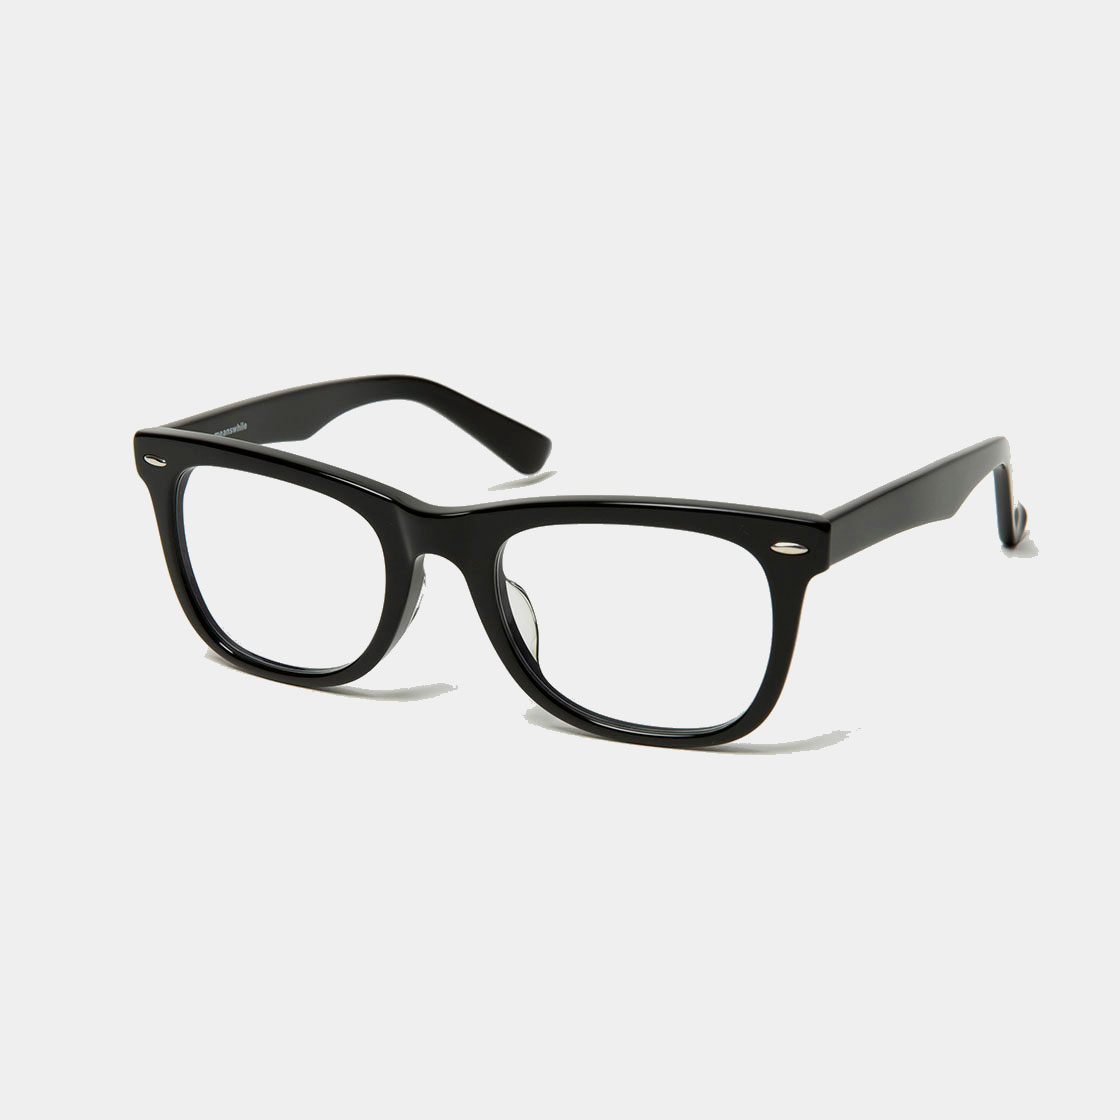 Transition Color Glasses “Neutral Color” / Black×Pilot Green